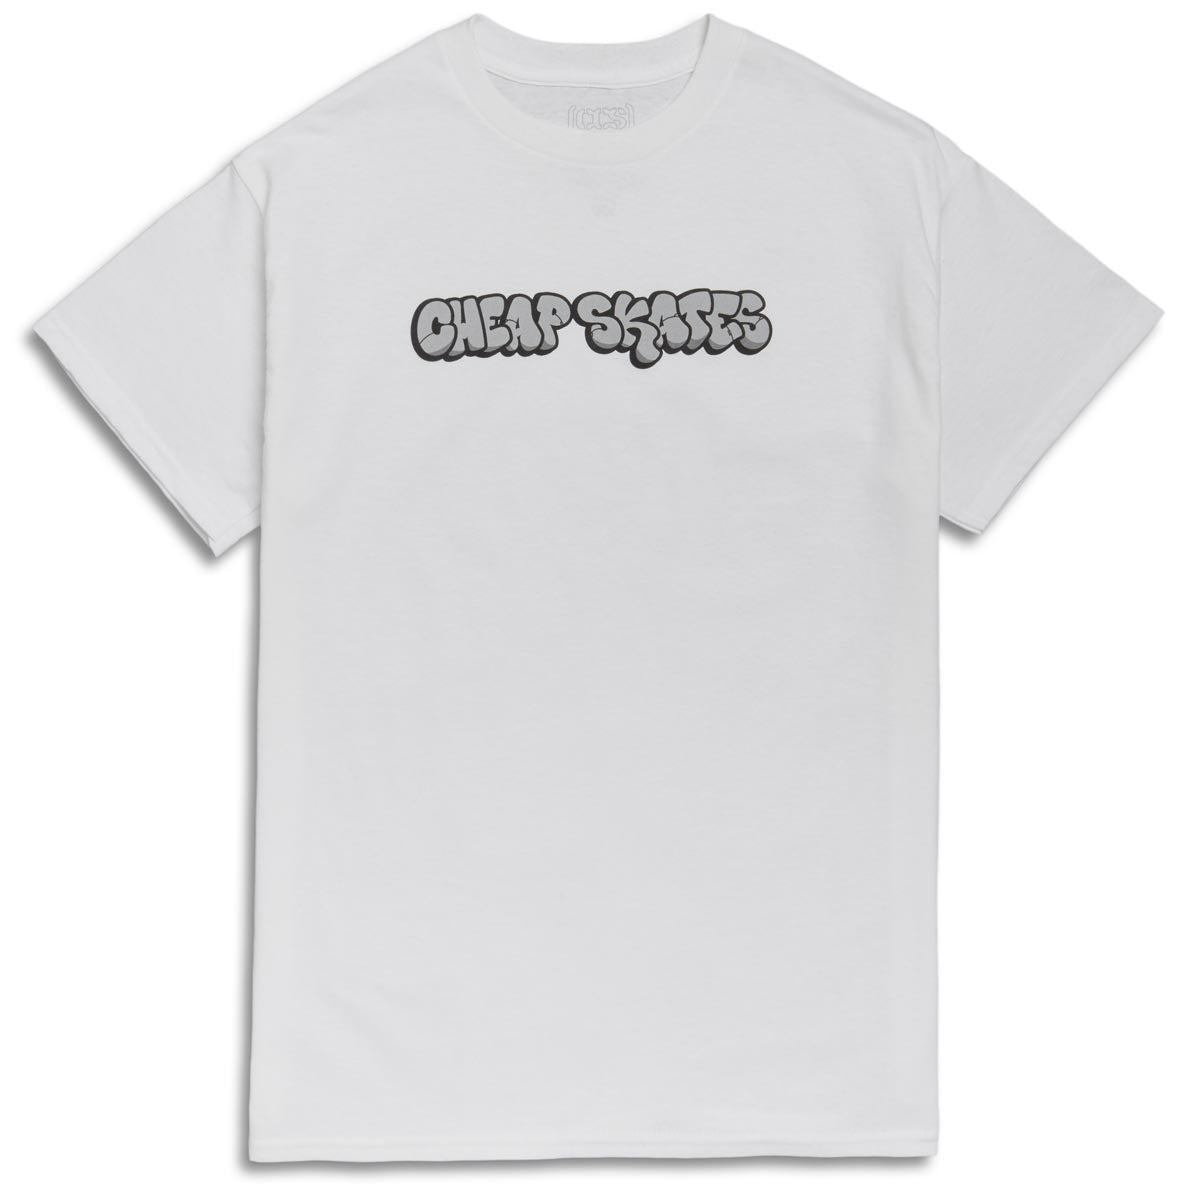 CCS Cheap Skates Tag T-Shirt - White/Grey/Black image 1